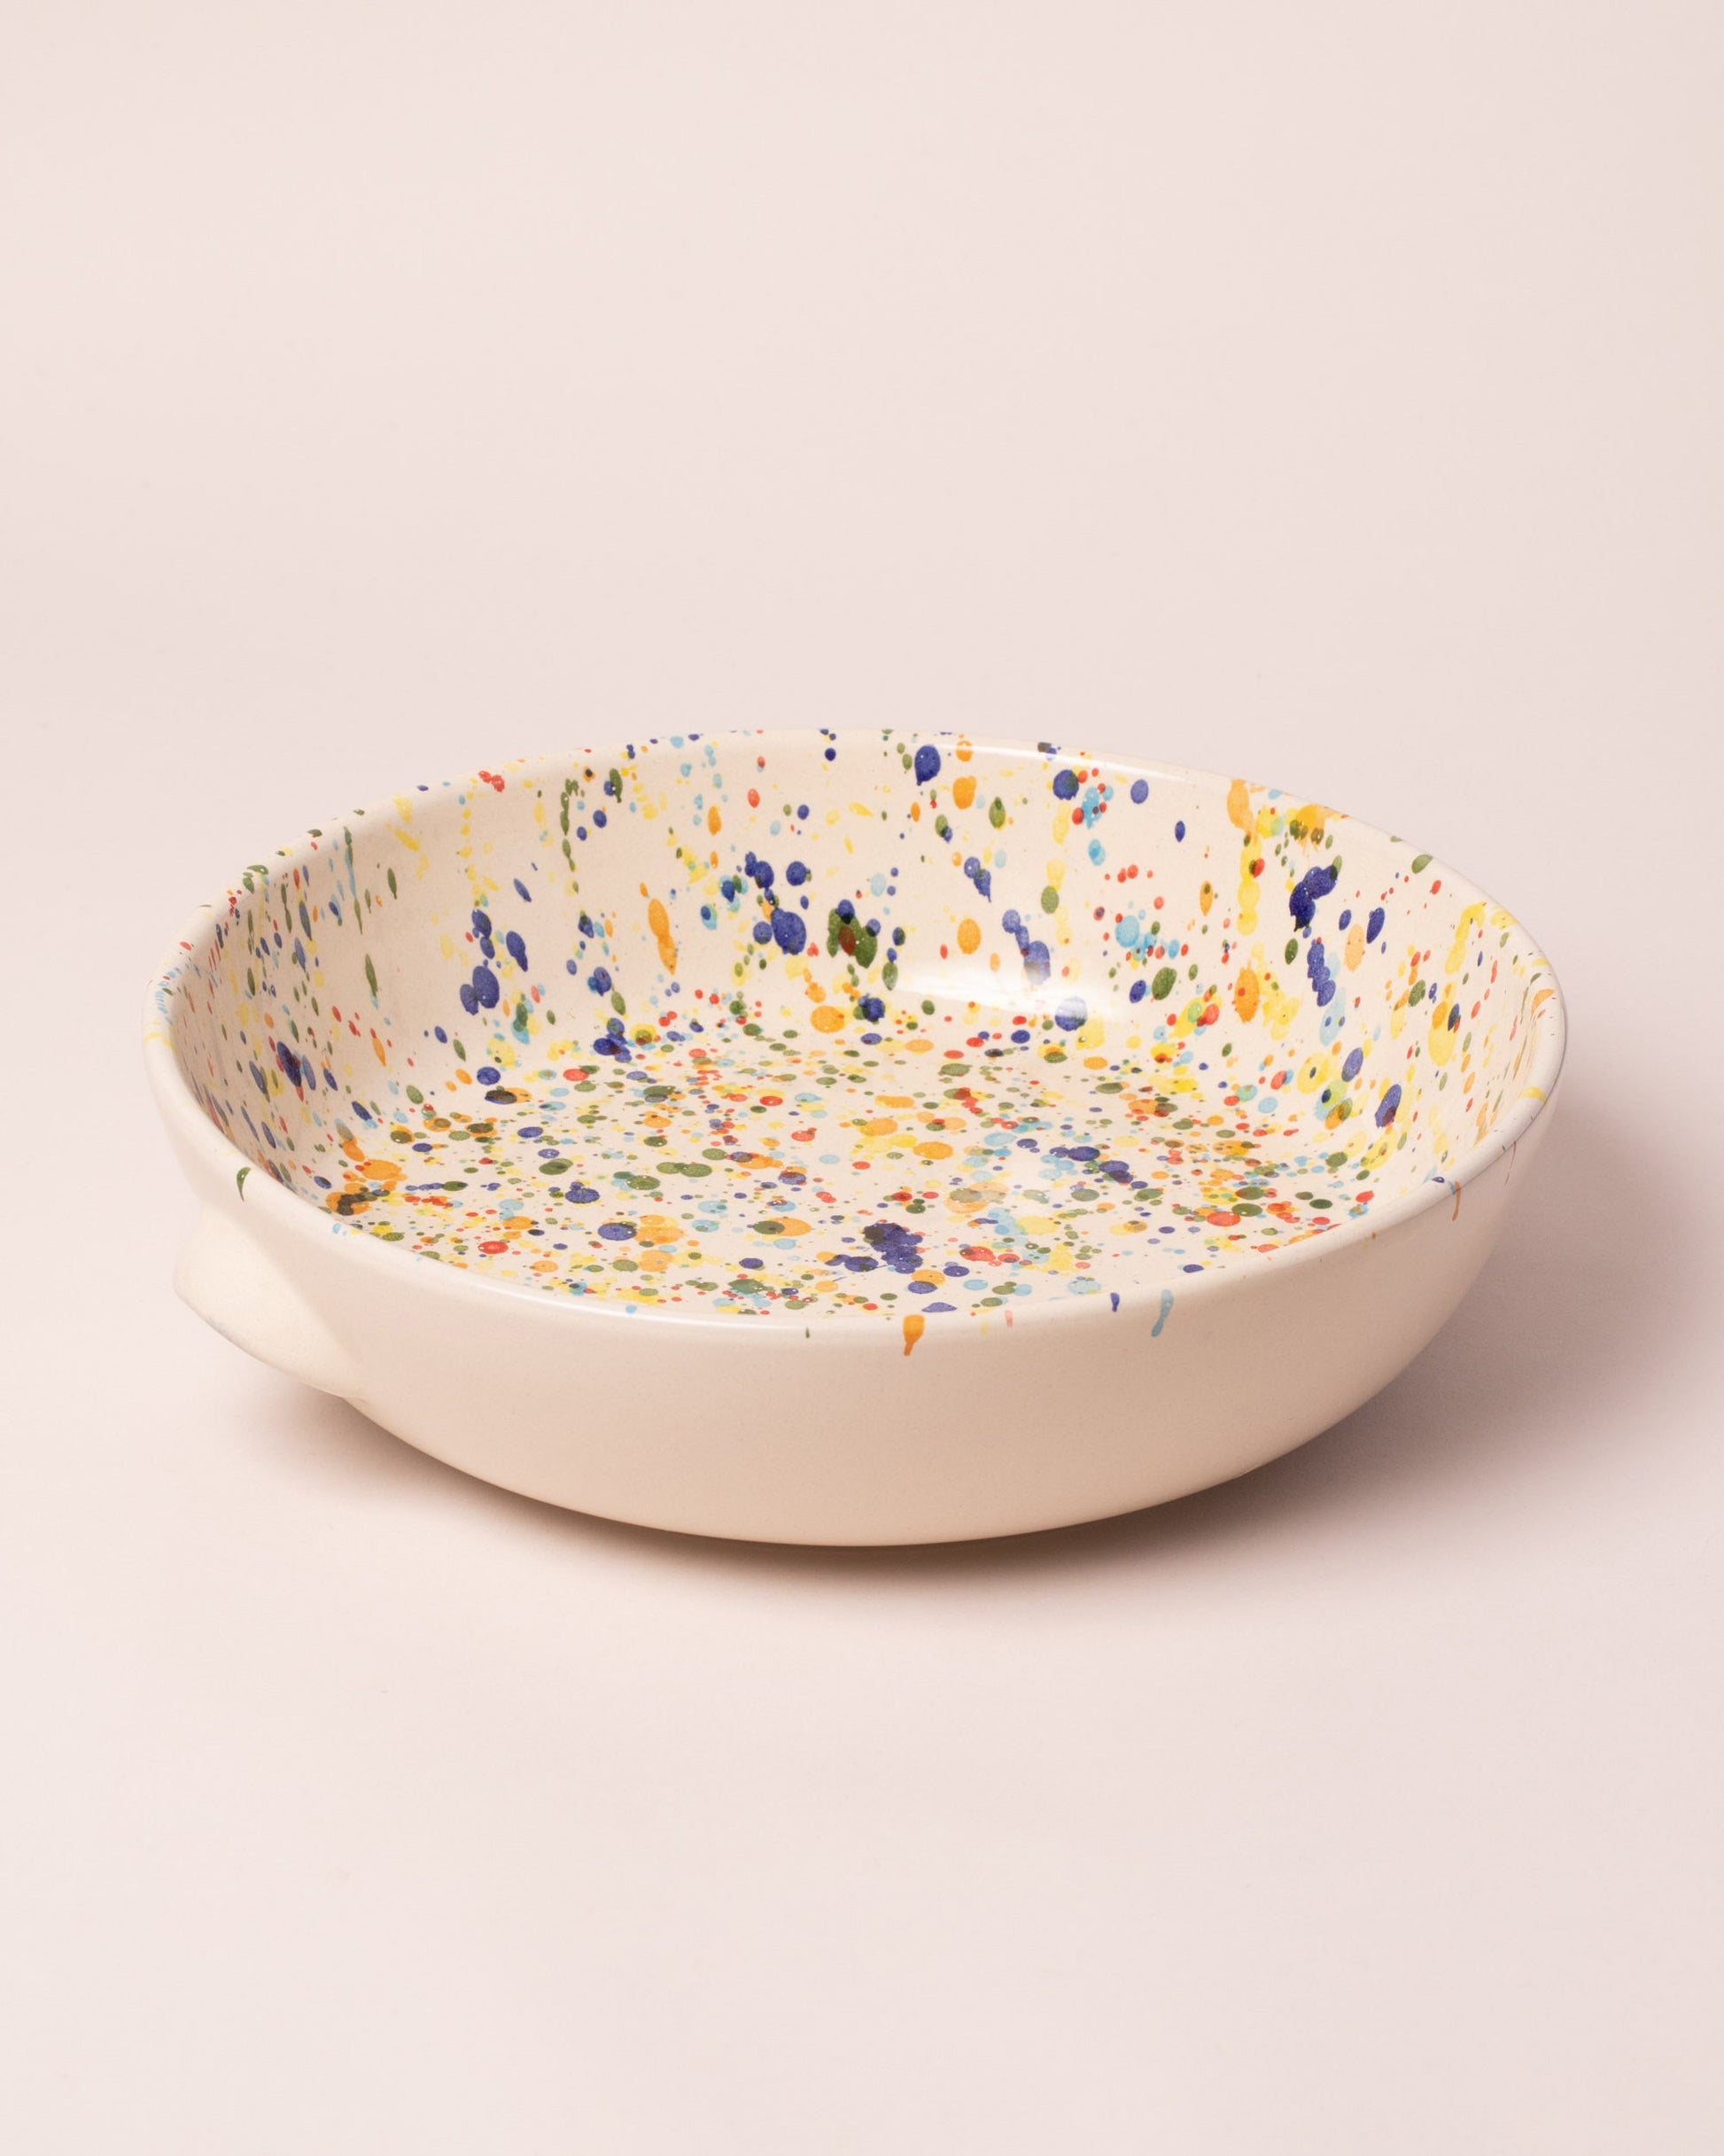 La Ceramica Vincenzo Del Monaco Colored Drops Large Salad Bowl on light color background.